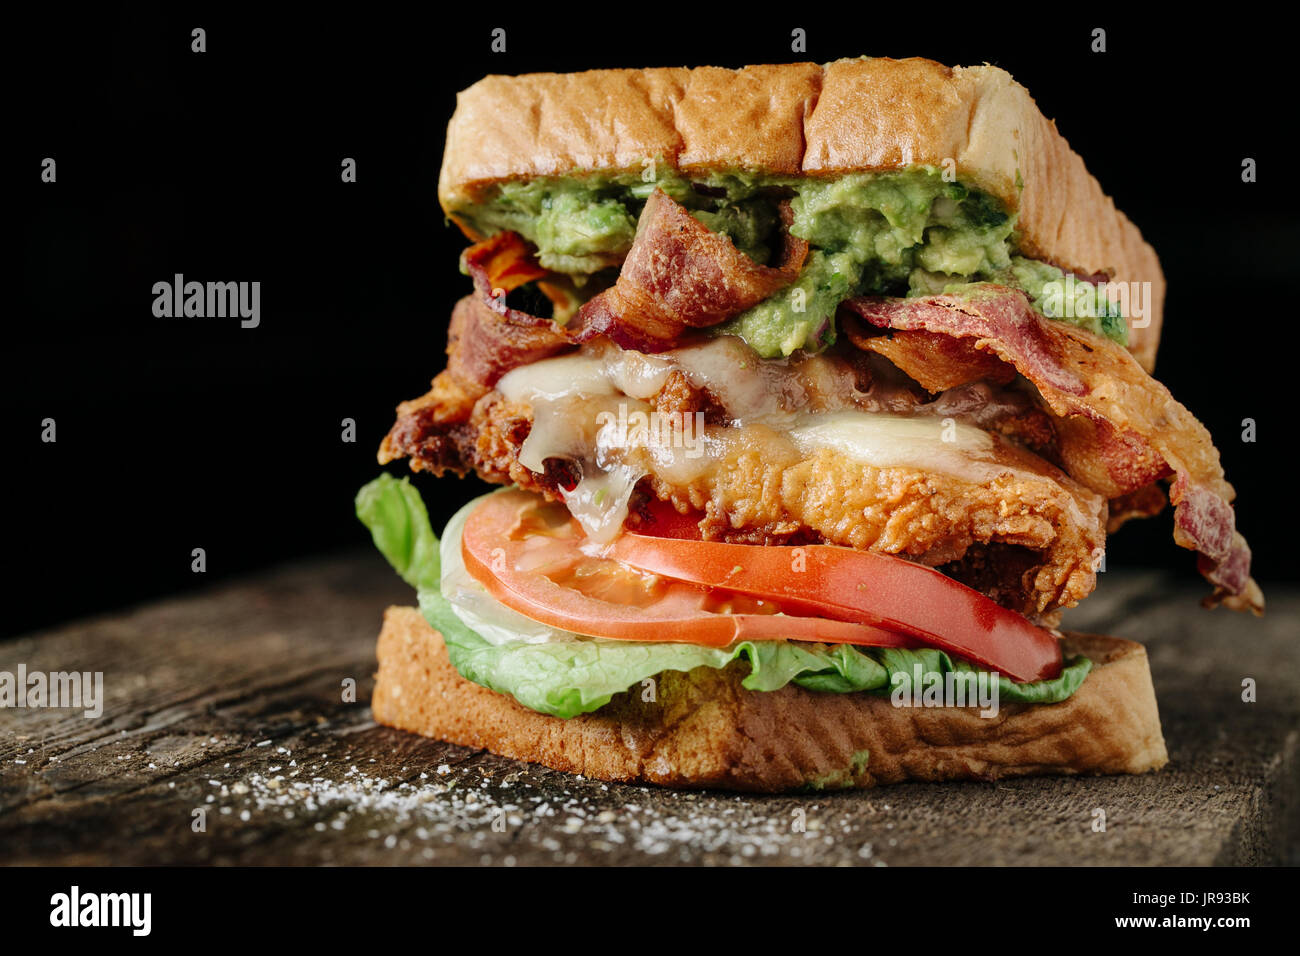 Chicken and Avocado BLT sandwich on black background Stock Photo